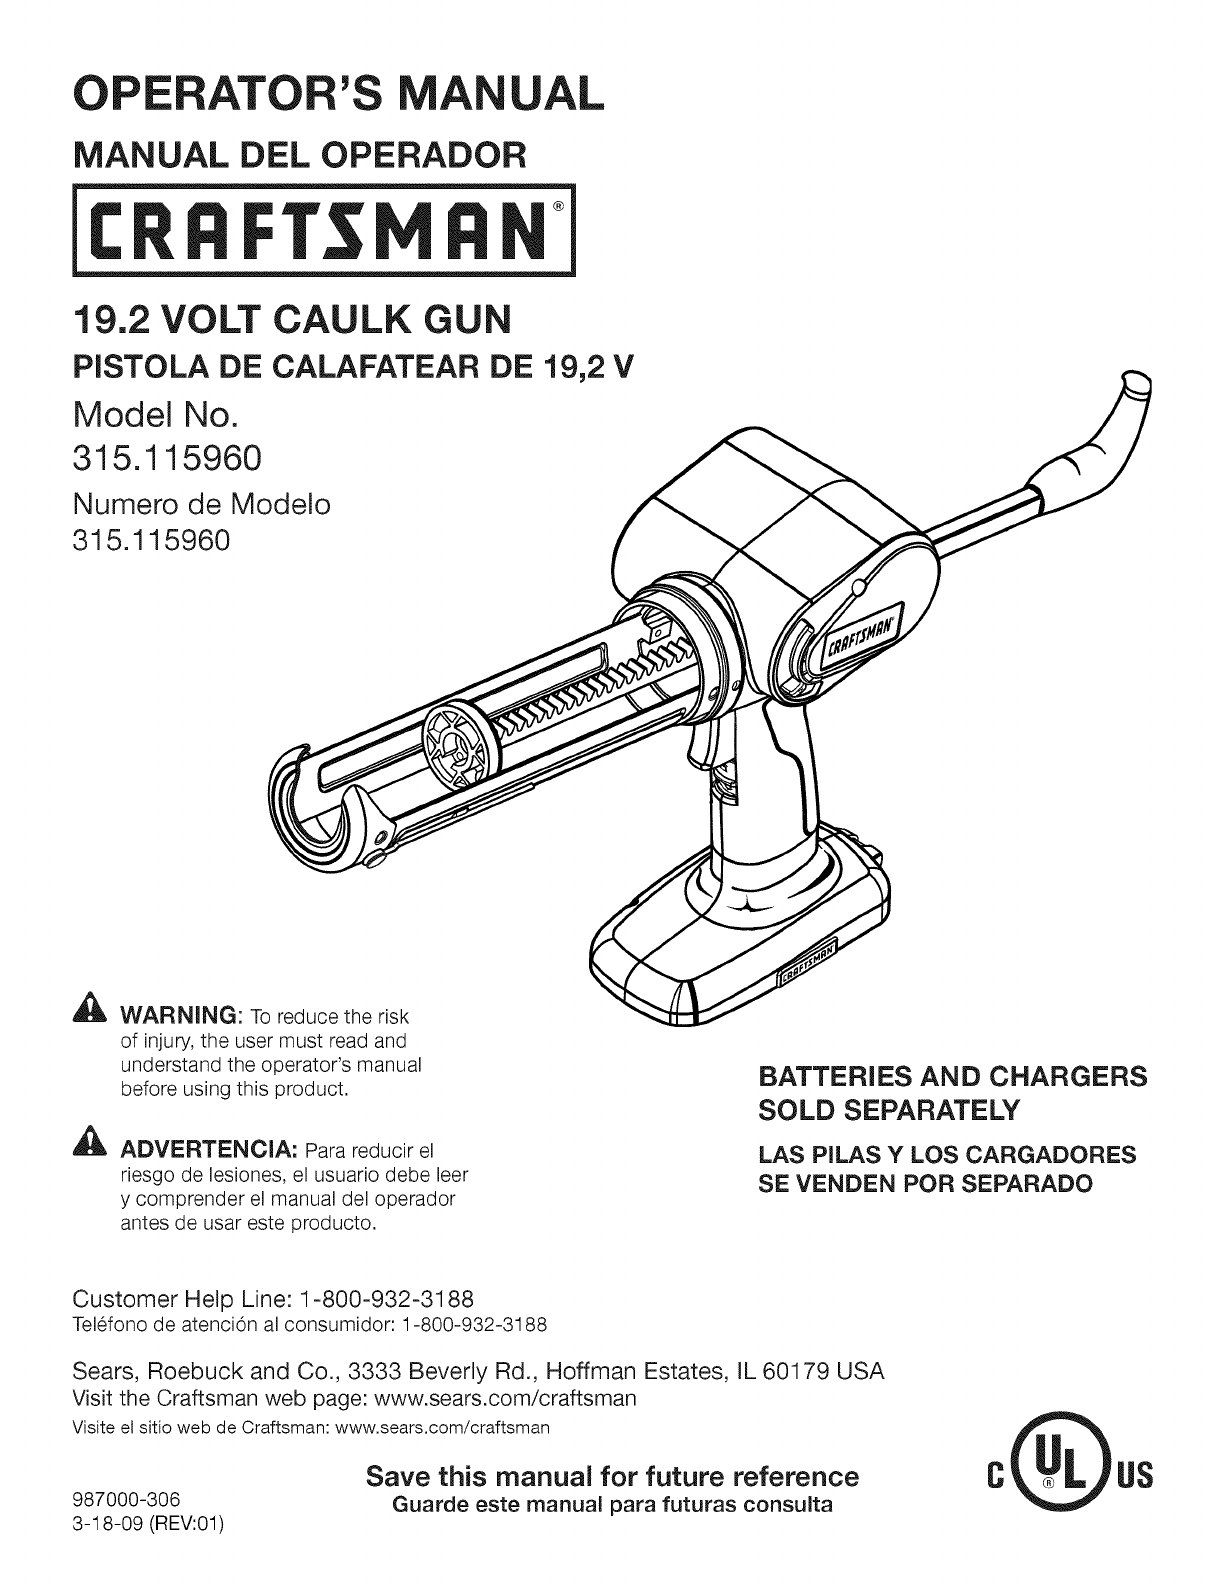 Craftsman 315115960 User Manual CAULK GUN Manuals And Guides L0911339